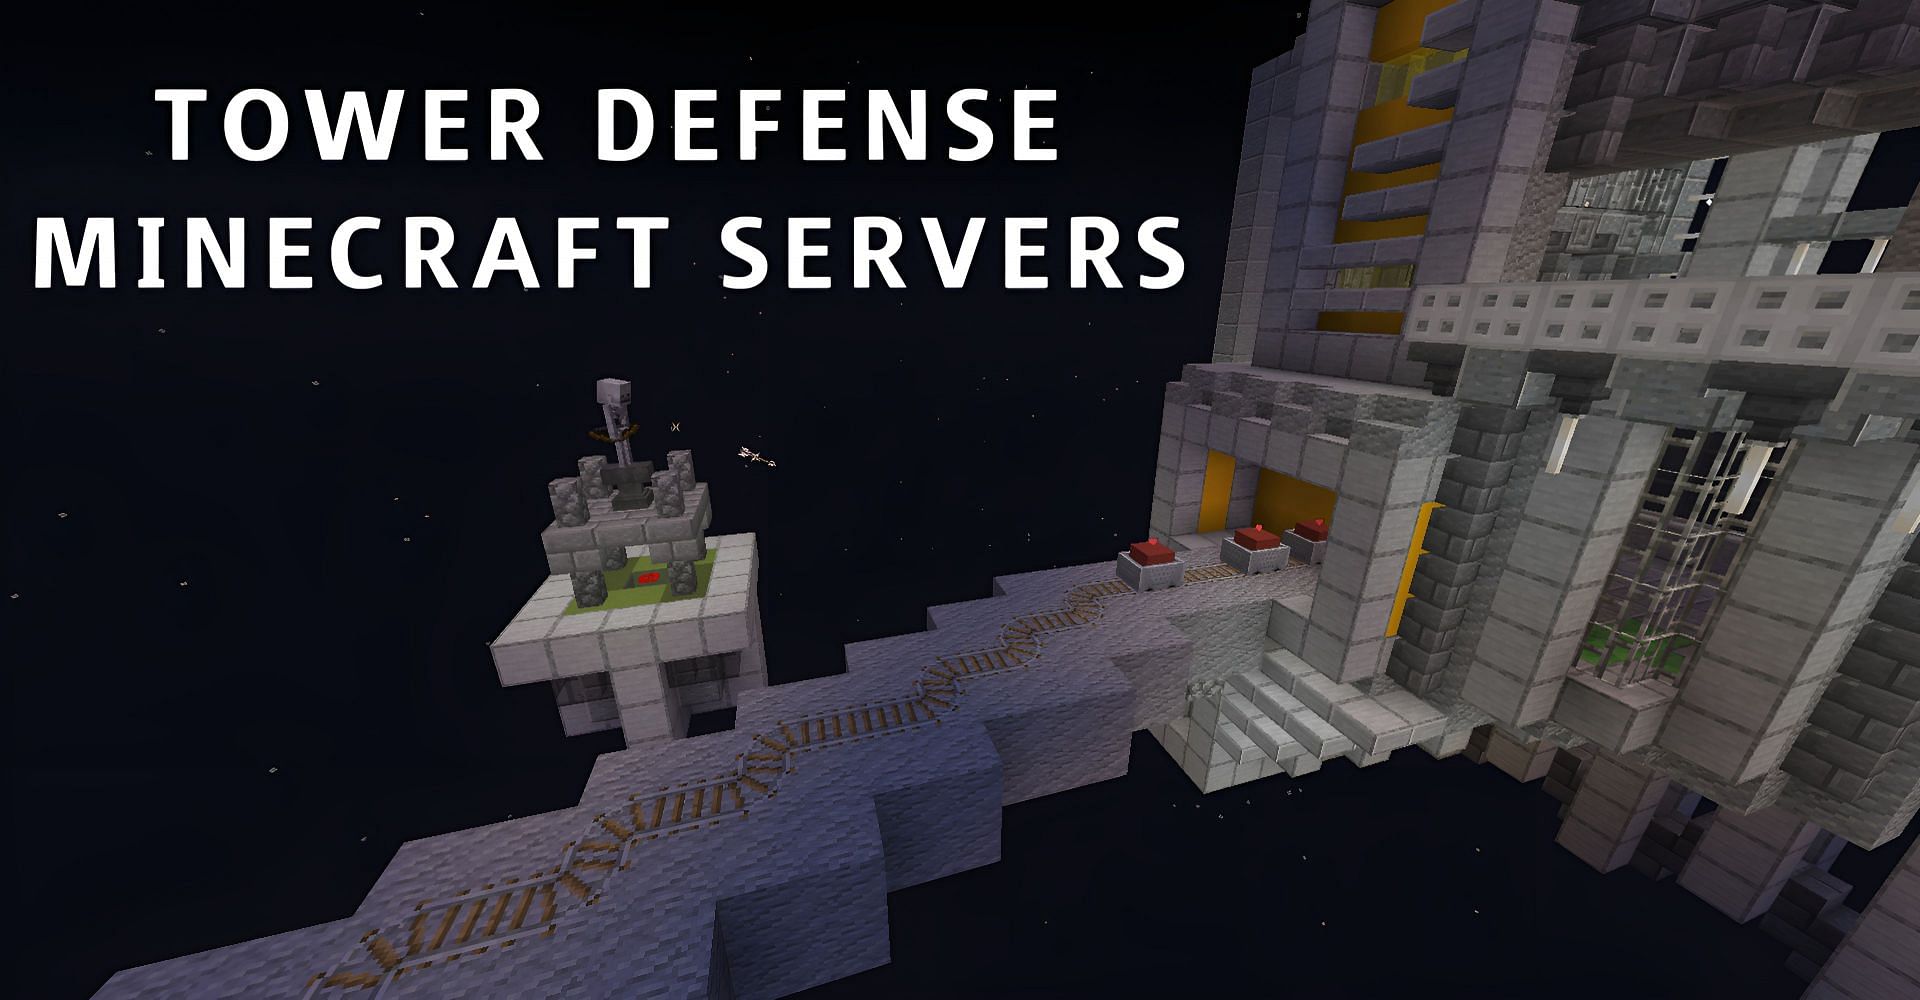 Tasks, Roblox: All Star Tower Defense Wiki